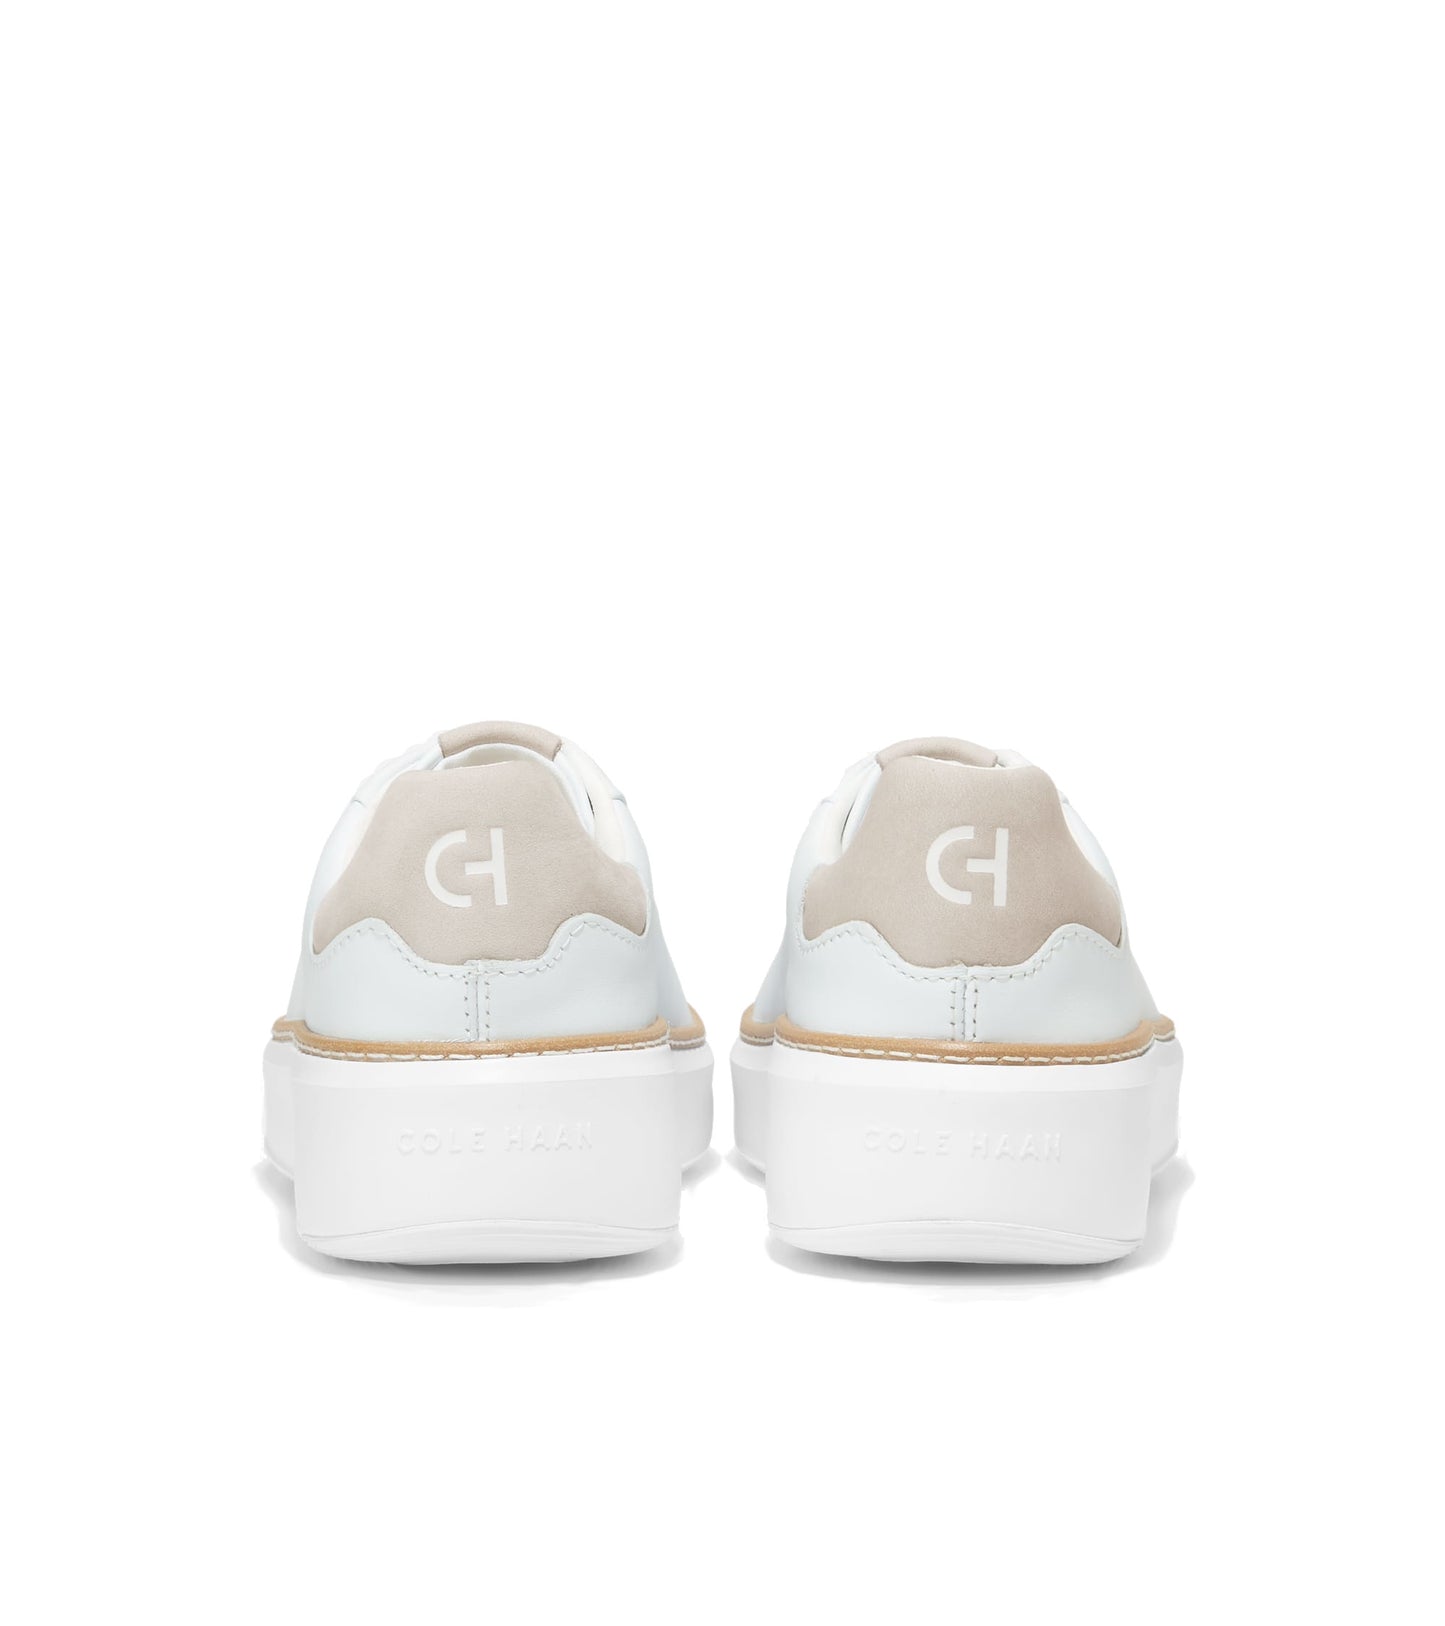 Cole Haan Women's GrandPrø Topspin Sneaker - White/Dove